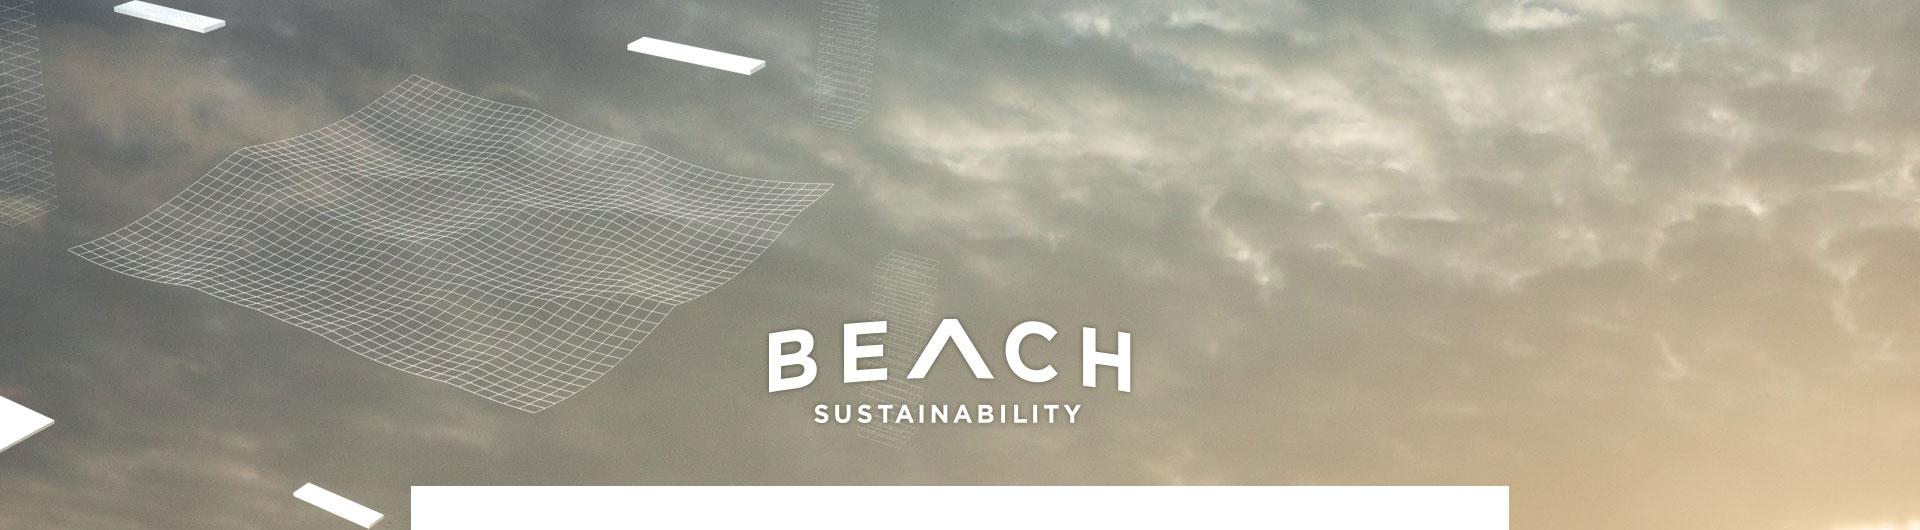 banner sustainability 